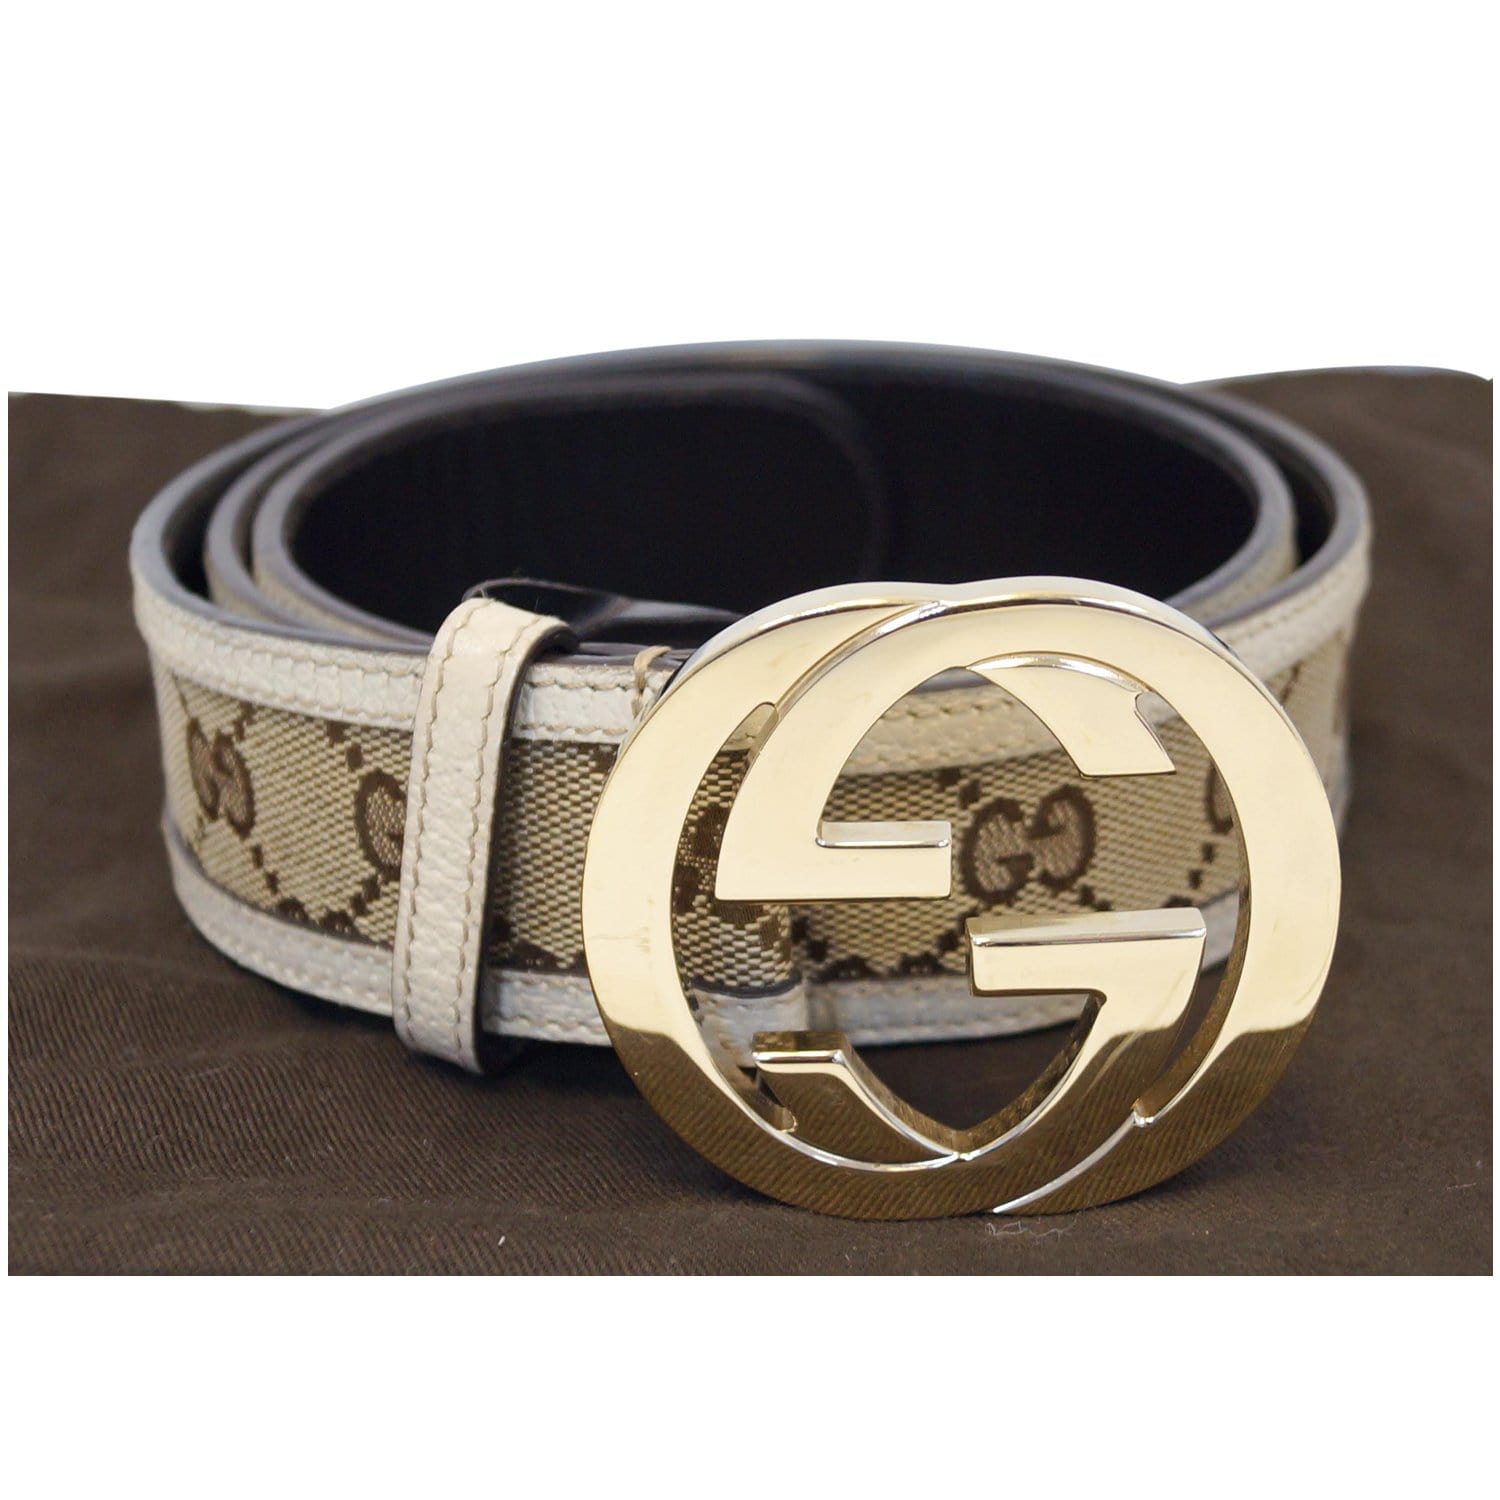 Interlocking buckle leather belt Gucci Beige size 90 cm in Leather